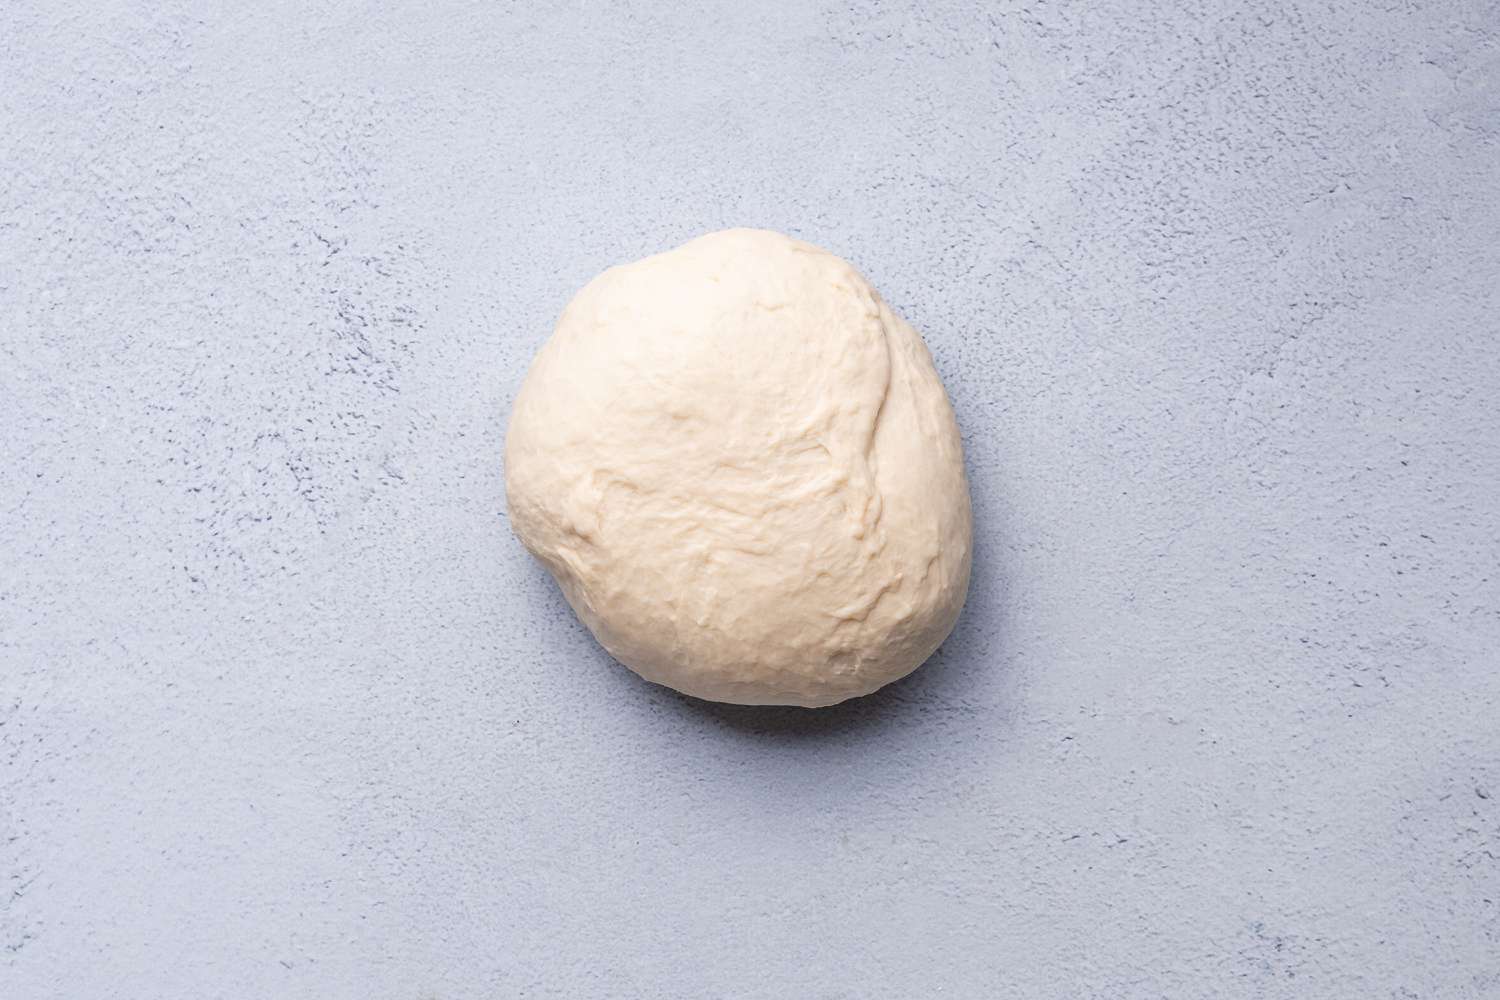 A smooth ball of kneaded dough